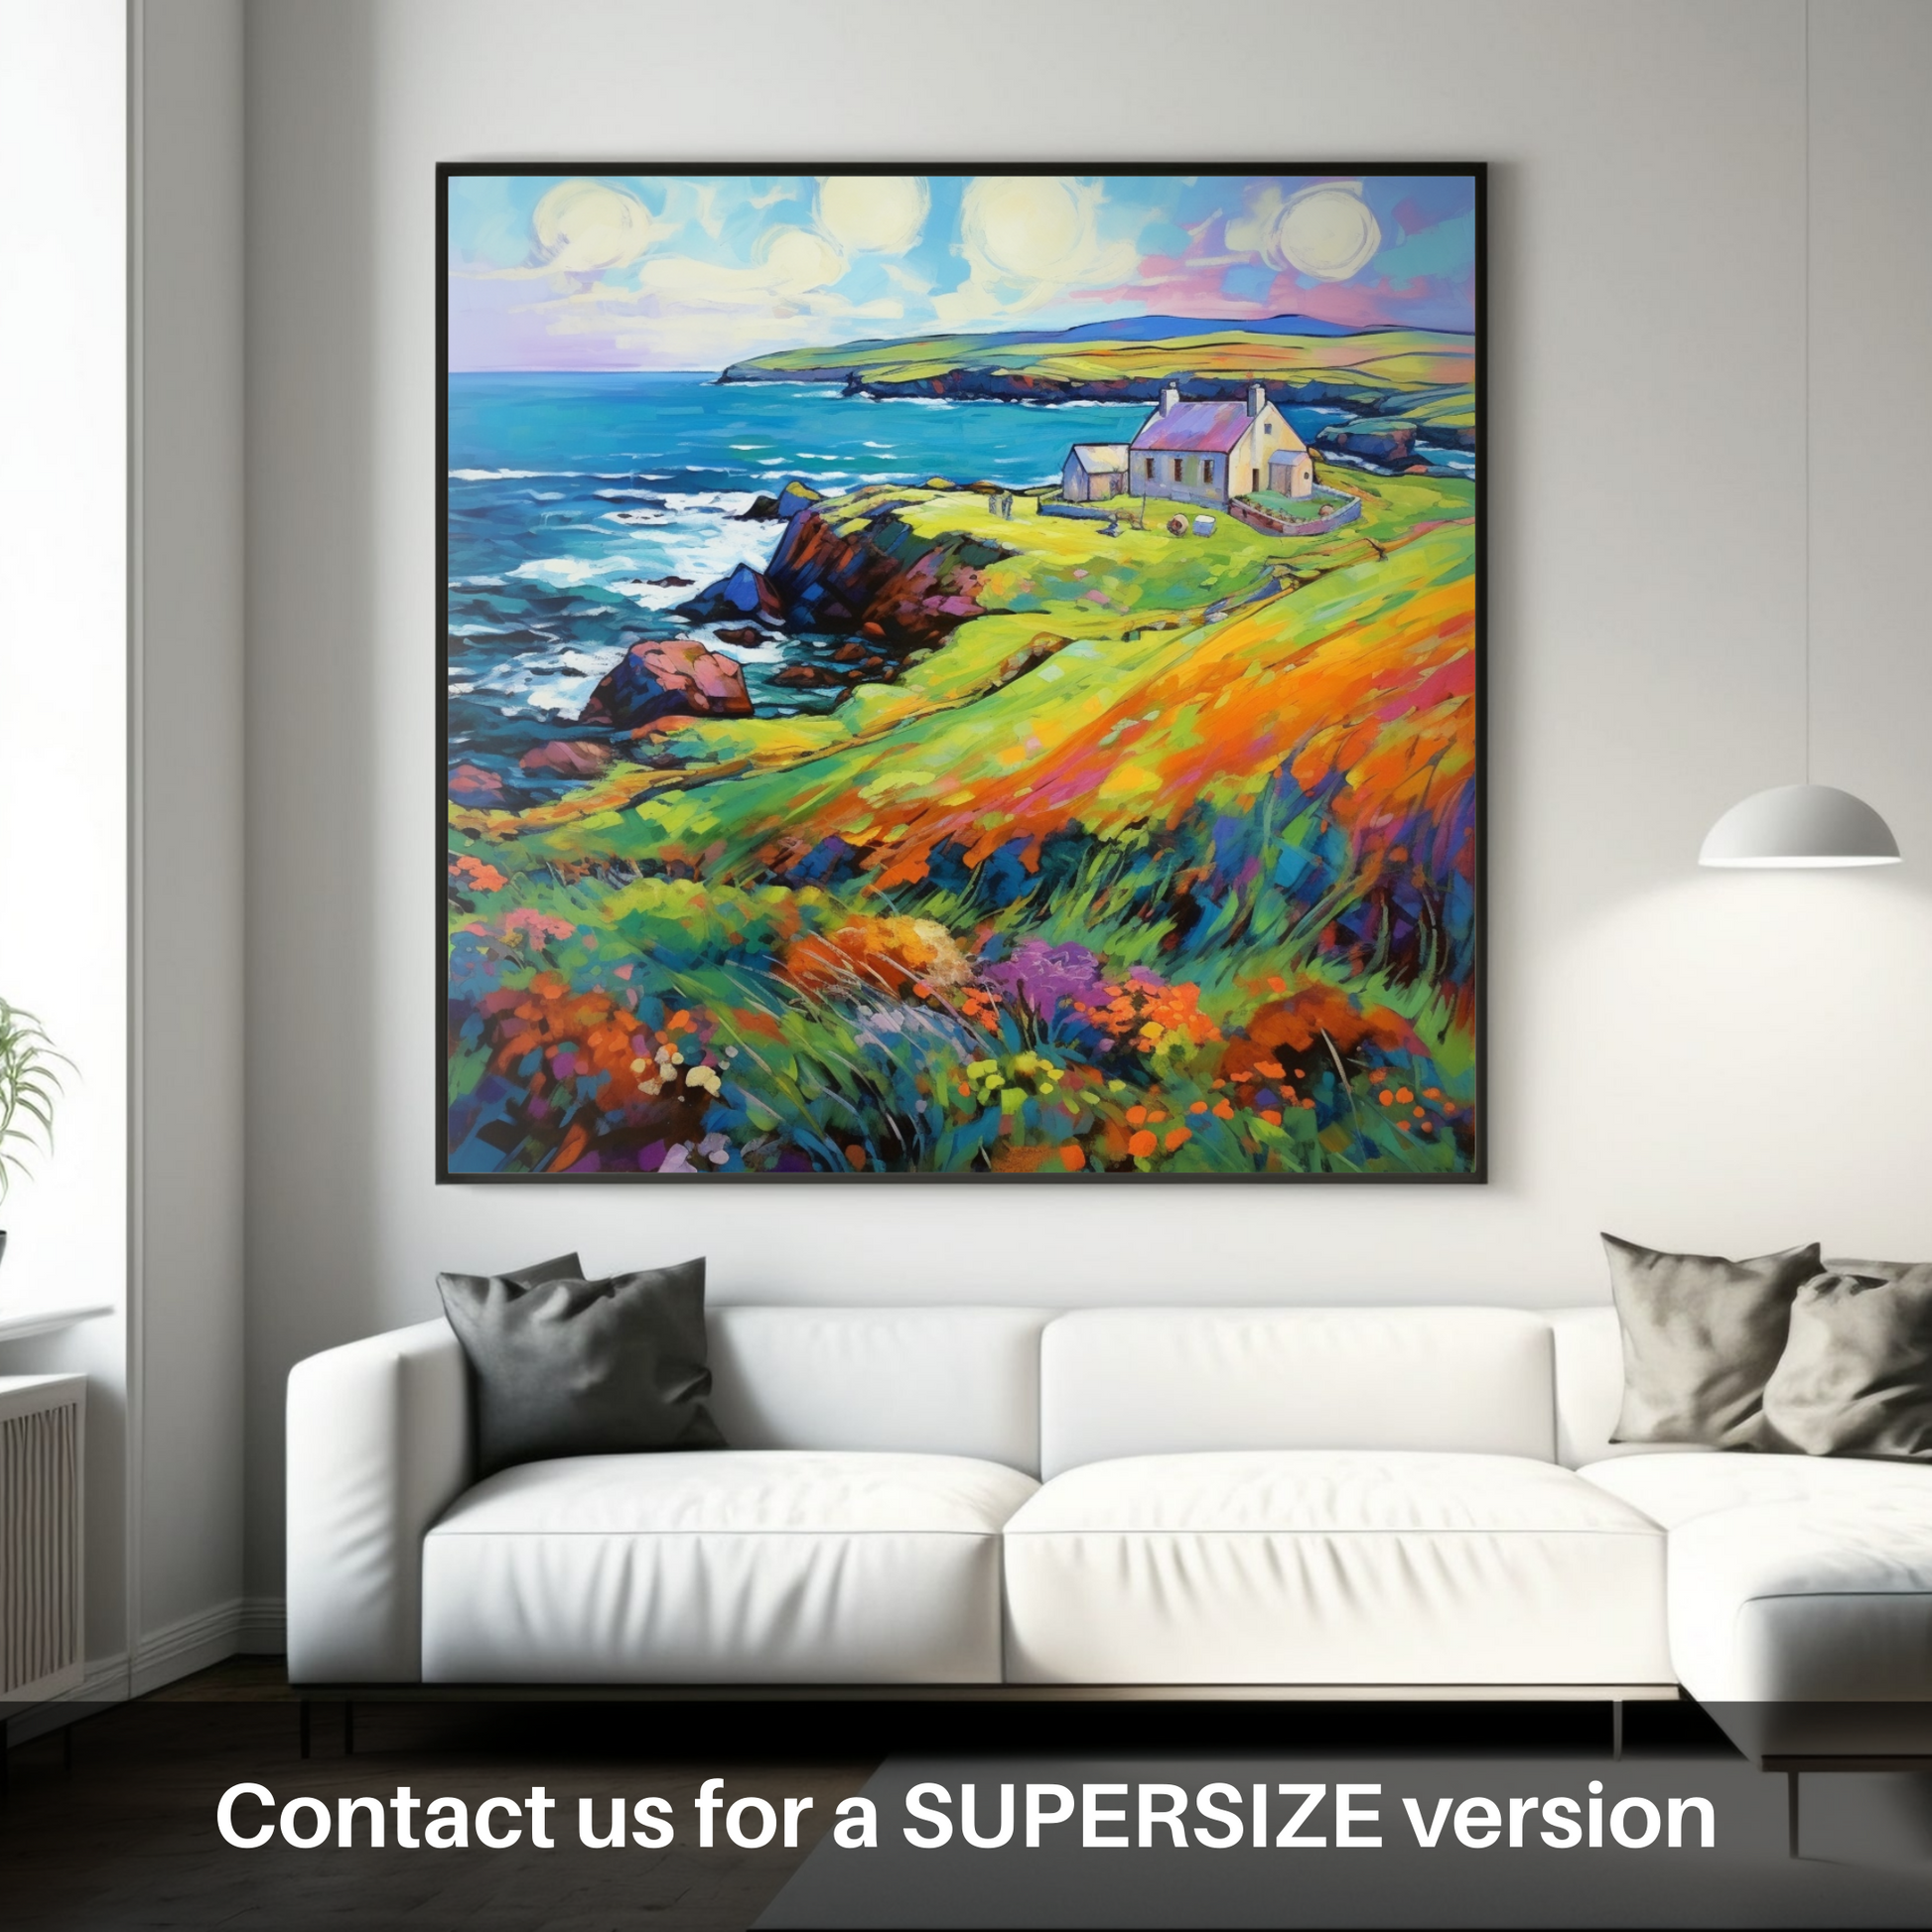 Huge supersize print of Shetland, North of mainland Scotland in summer